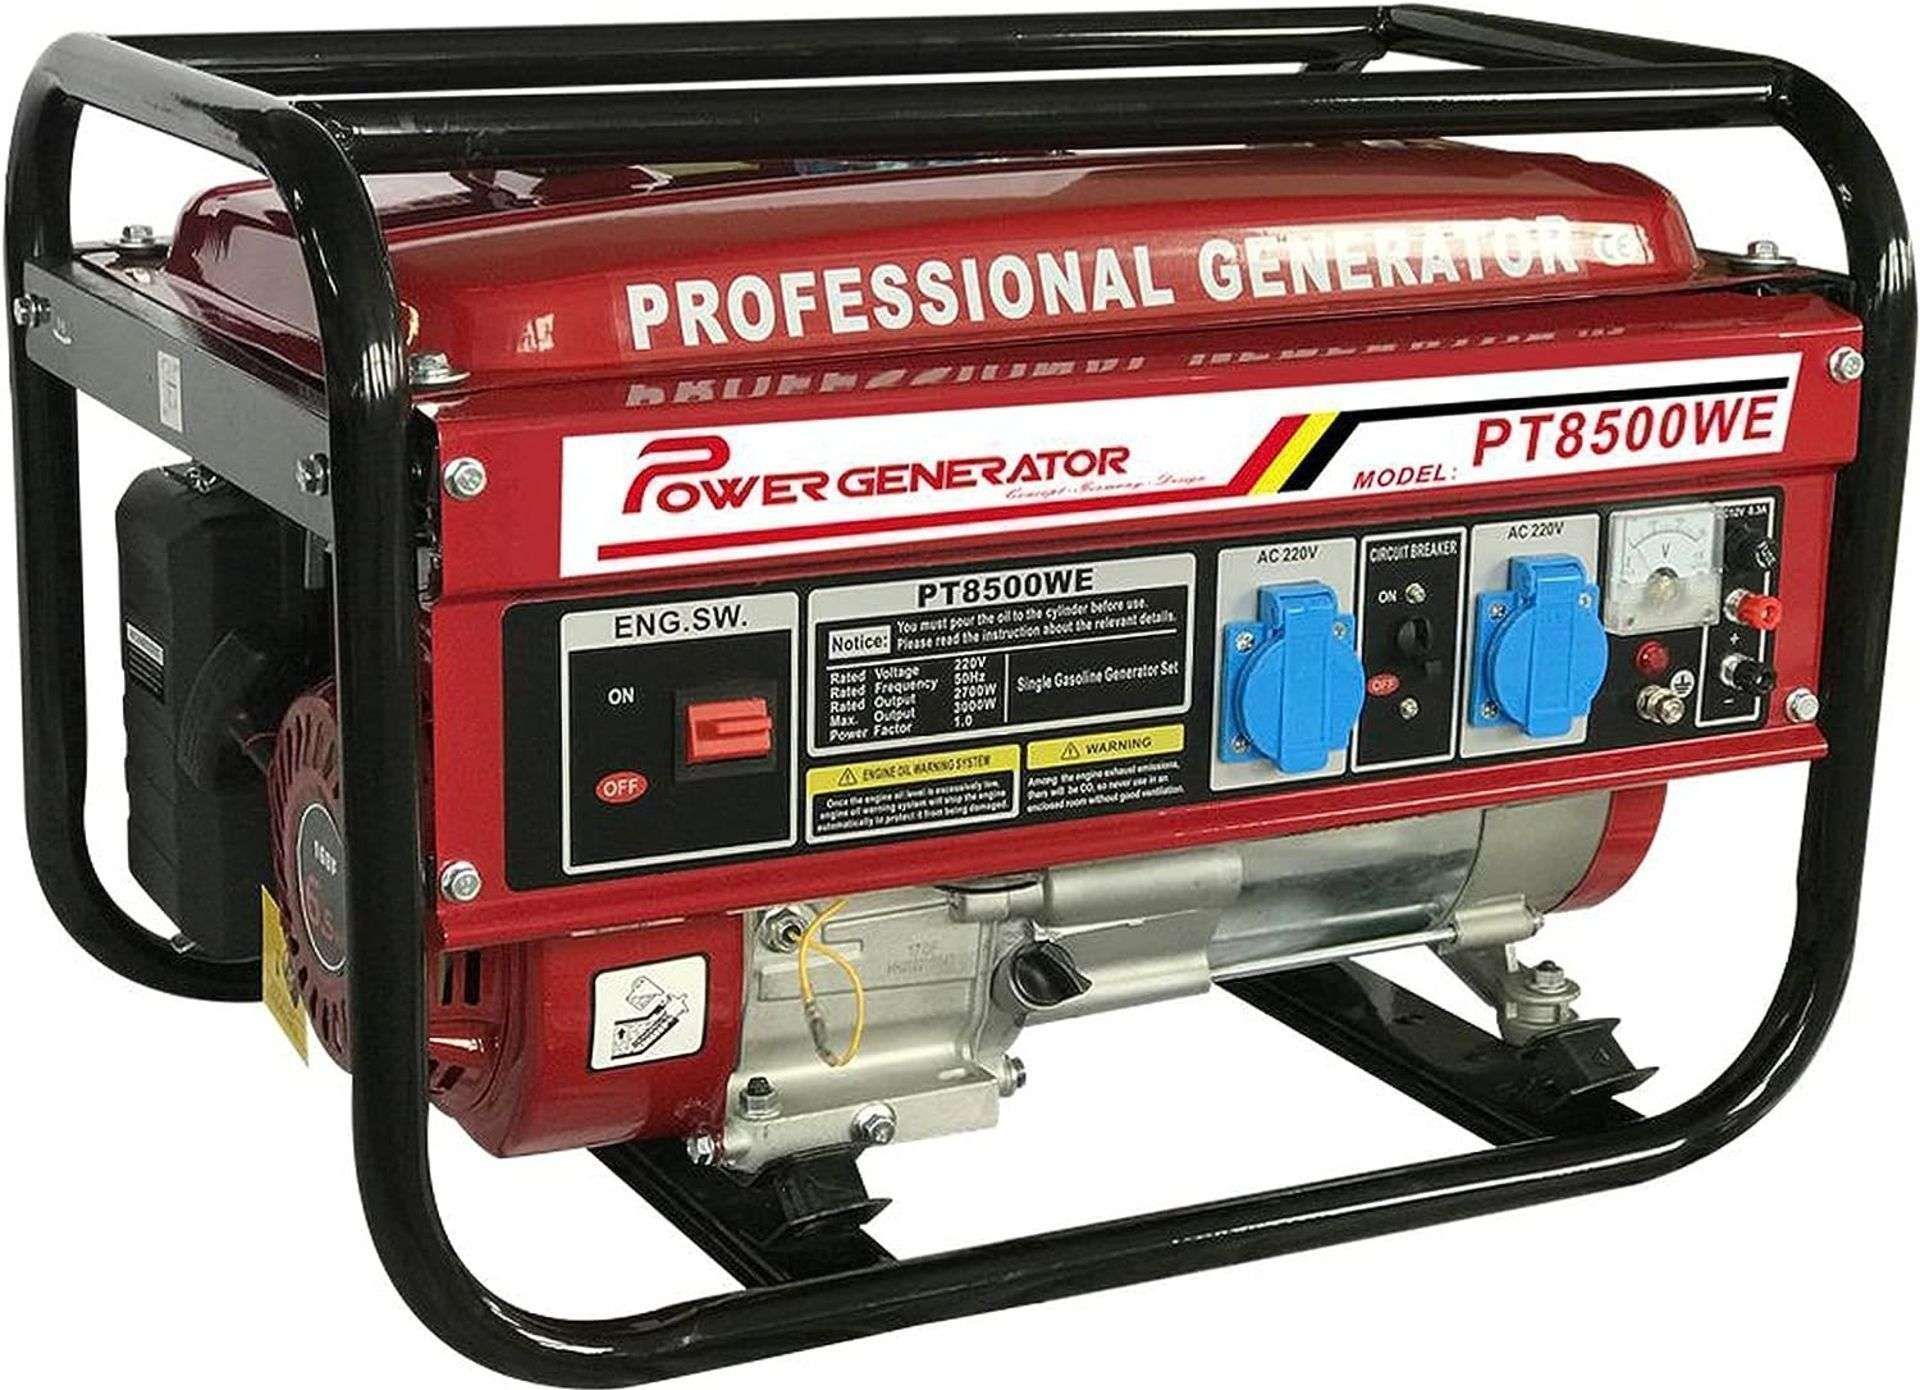 Trade Lot 3 x New & Boxed Professional Petrol Generator PT8500WE 2.7 kW. Professional Gasoline